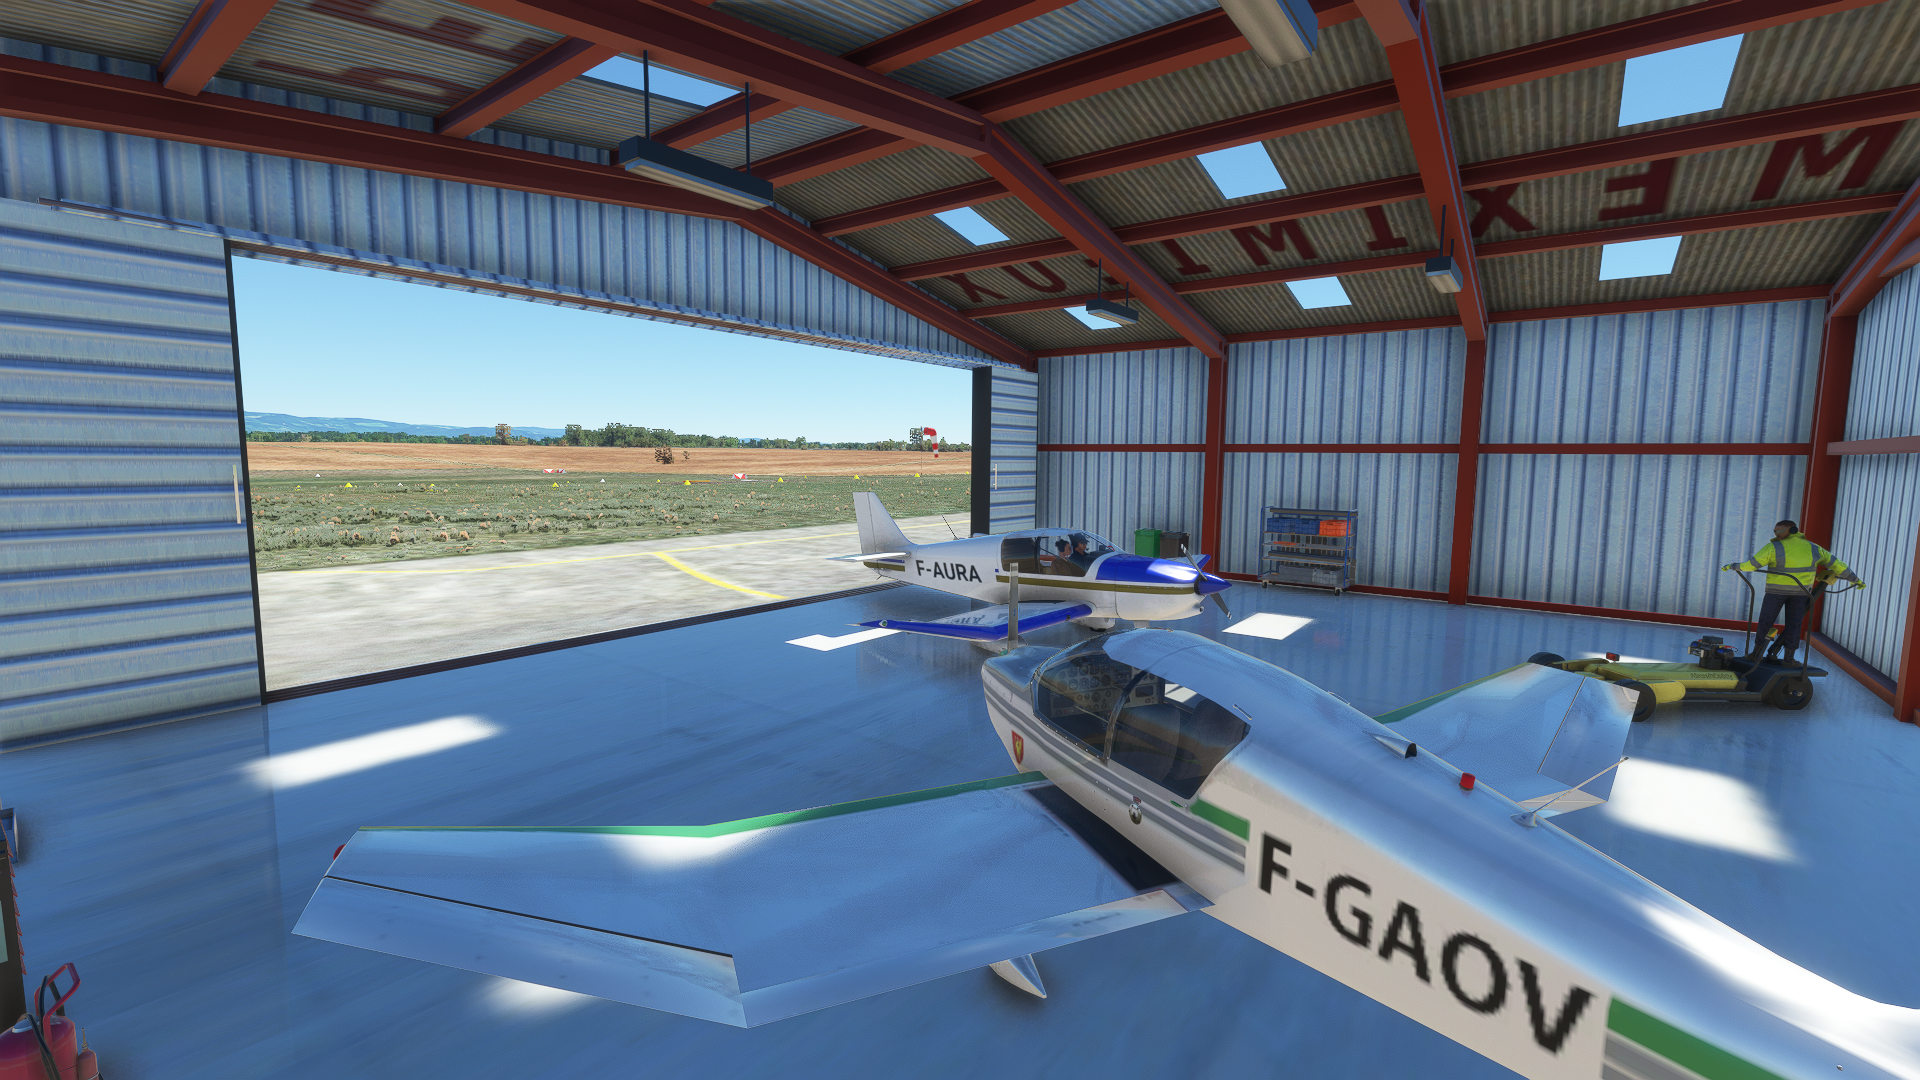 Lfhc hangar aeroclub